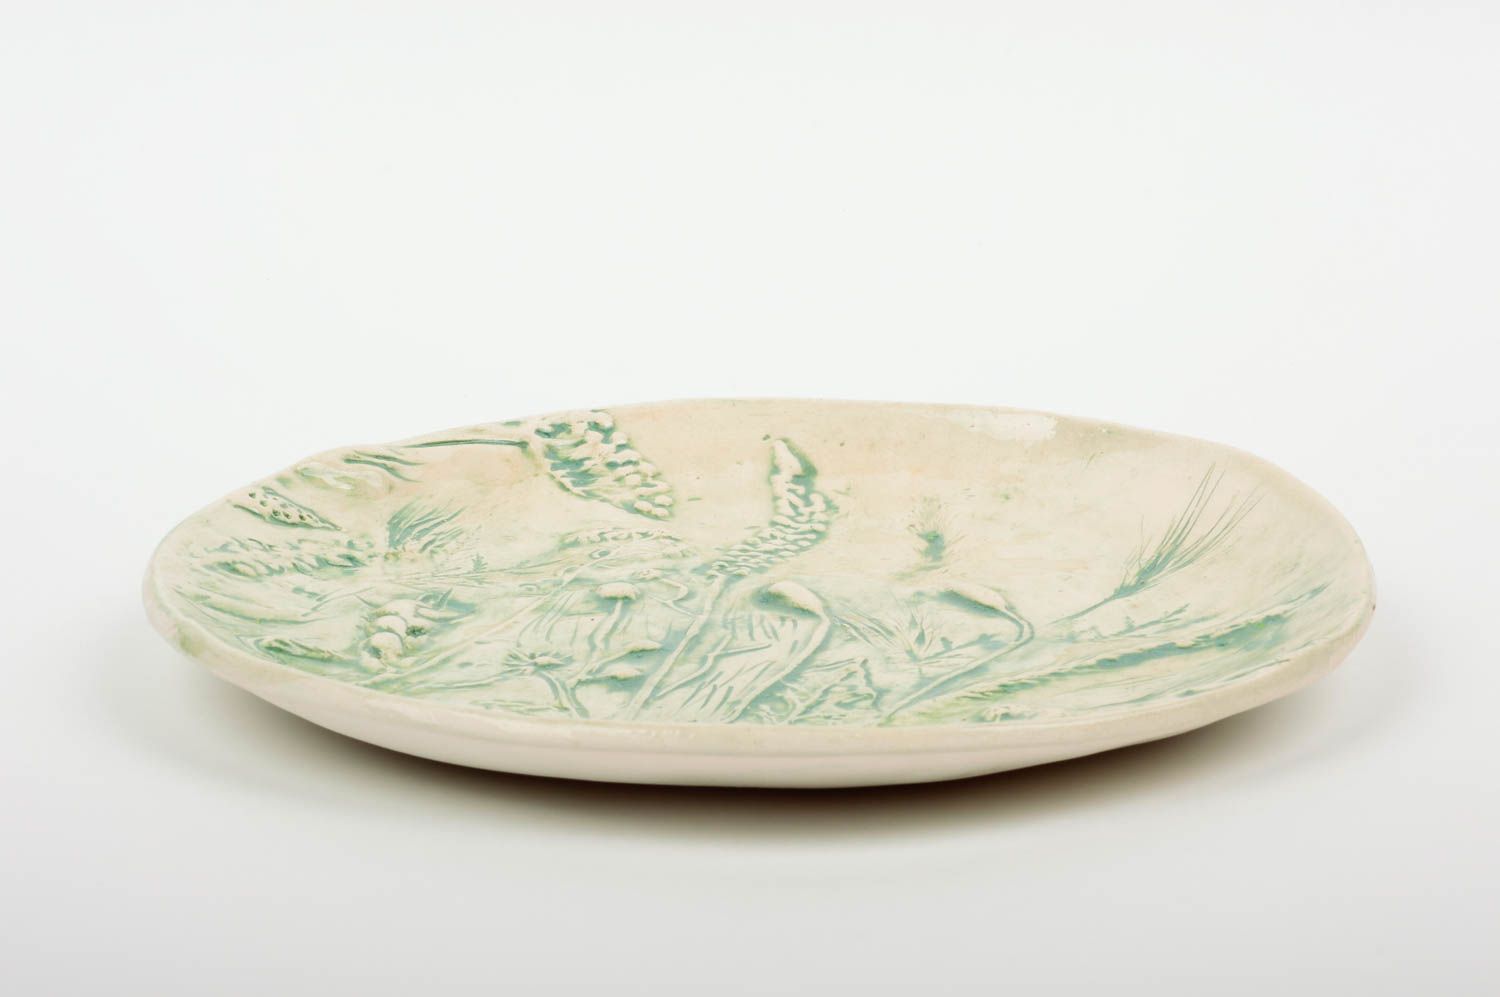 Handmade round clay plate painted ceramic plate decorative dishware ideas photo 2